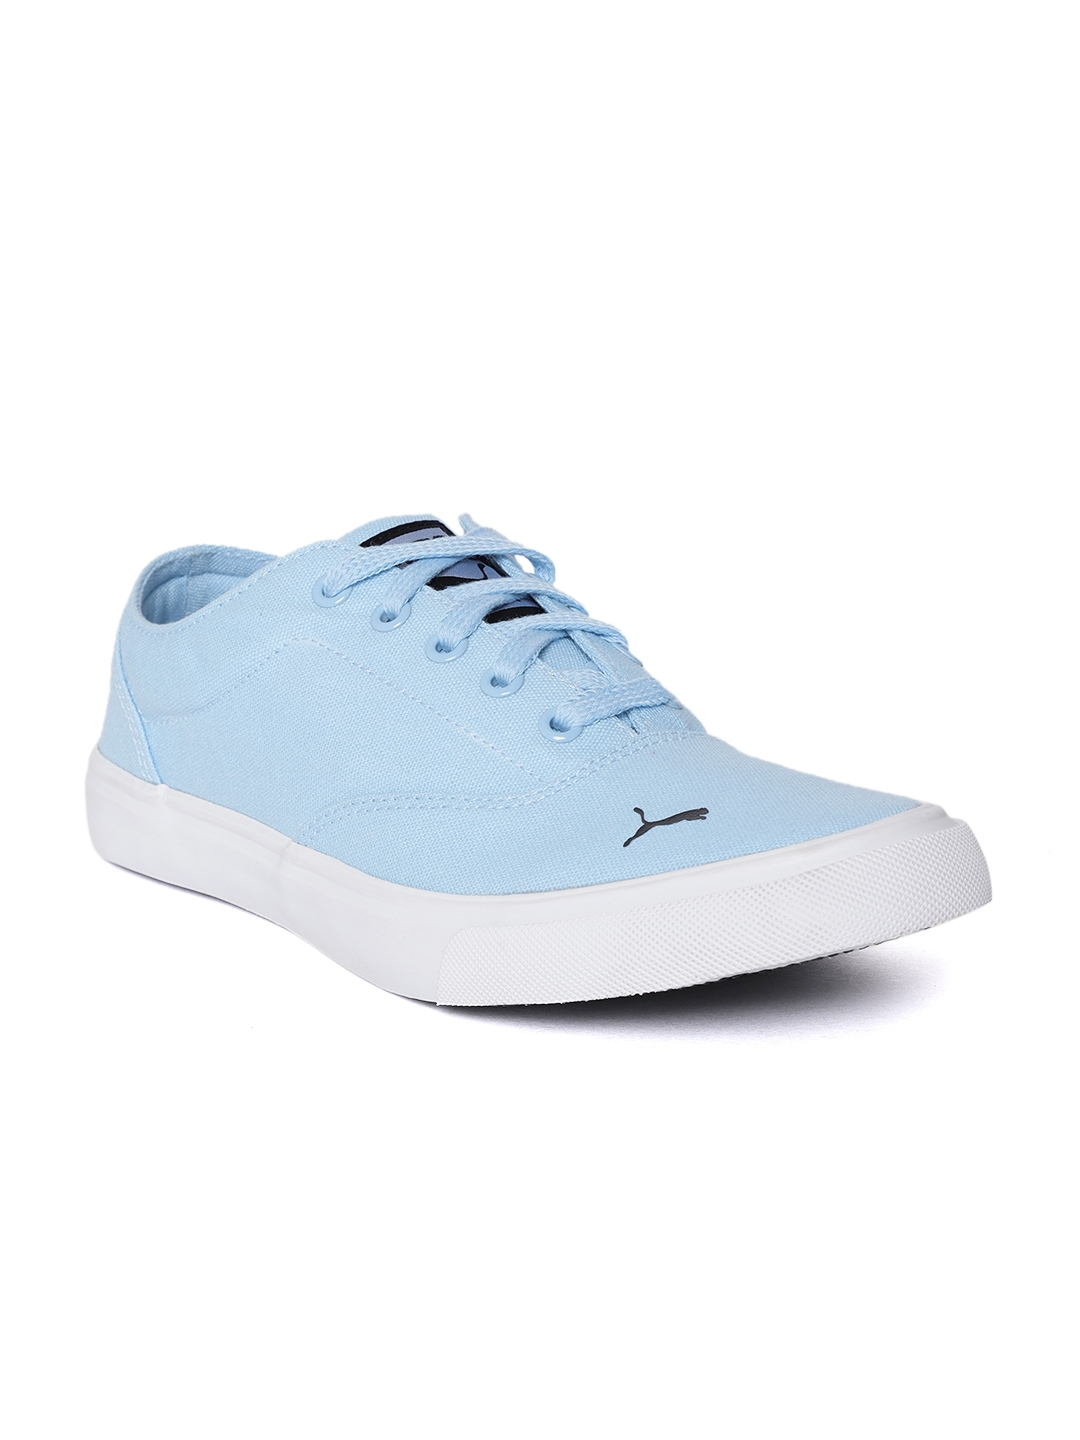 puma blue casual shoes